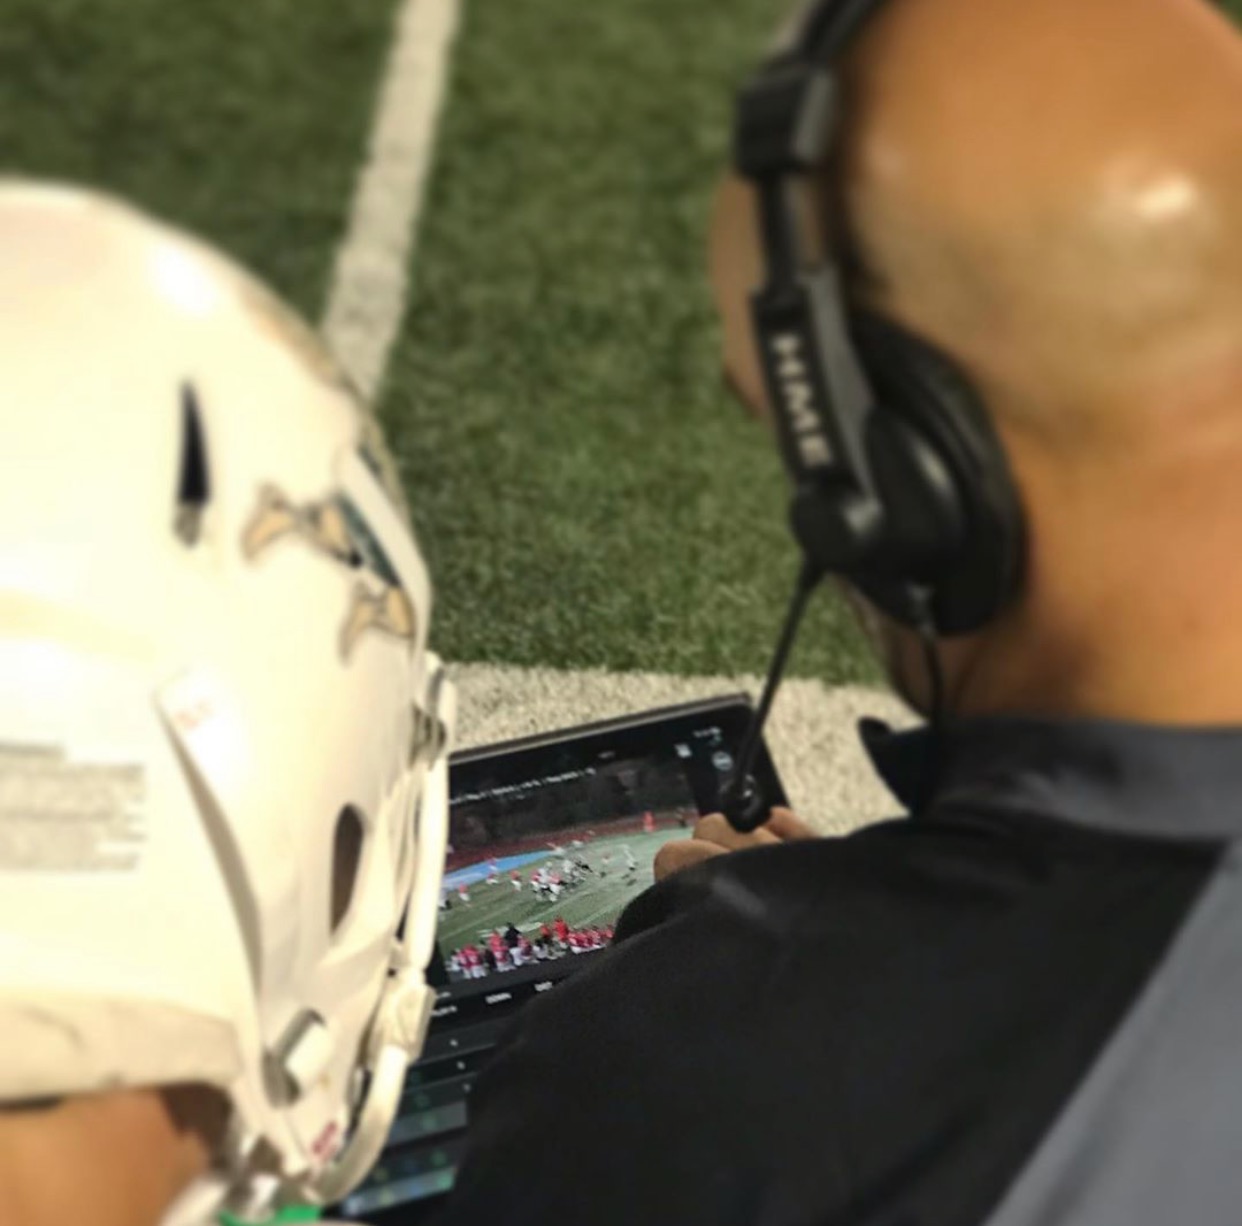 Coach-Kurt-Hines-Sideline-Replay-iPad